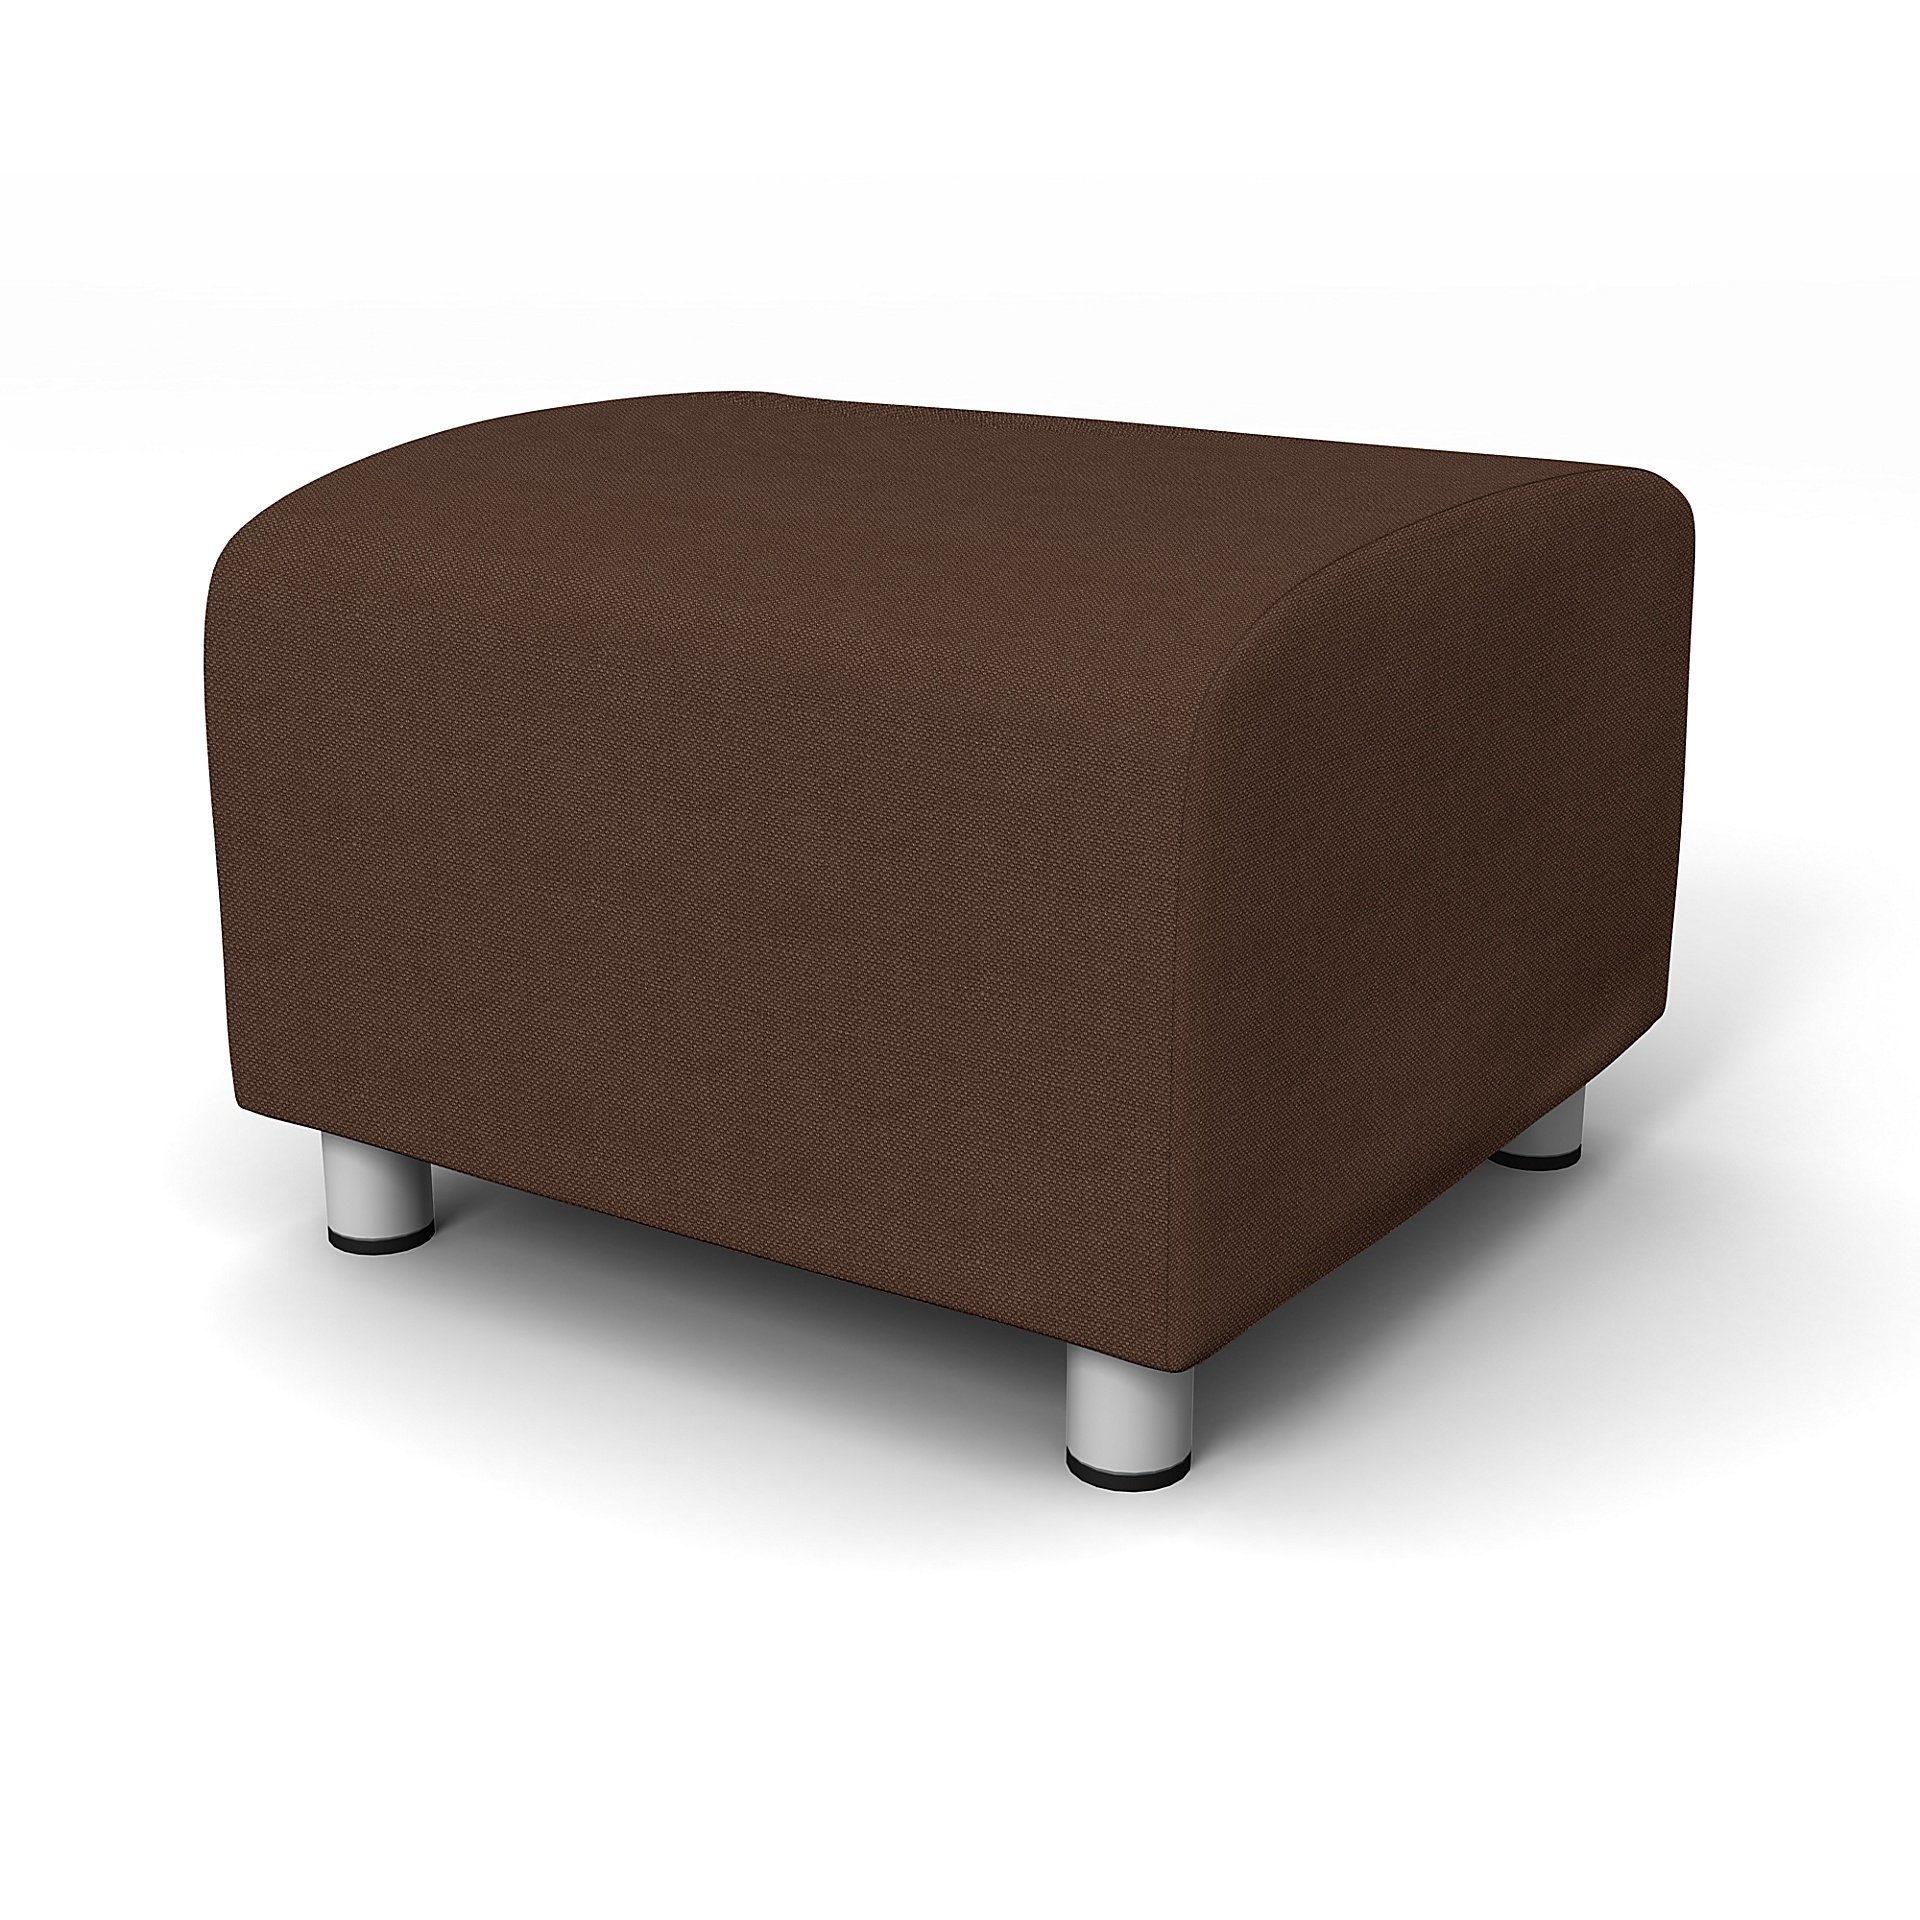 IKEA - Klippan Footstool Cover, Chocolate, Linen - Bemz